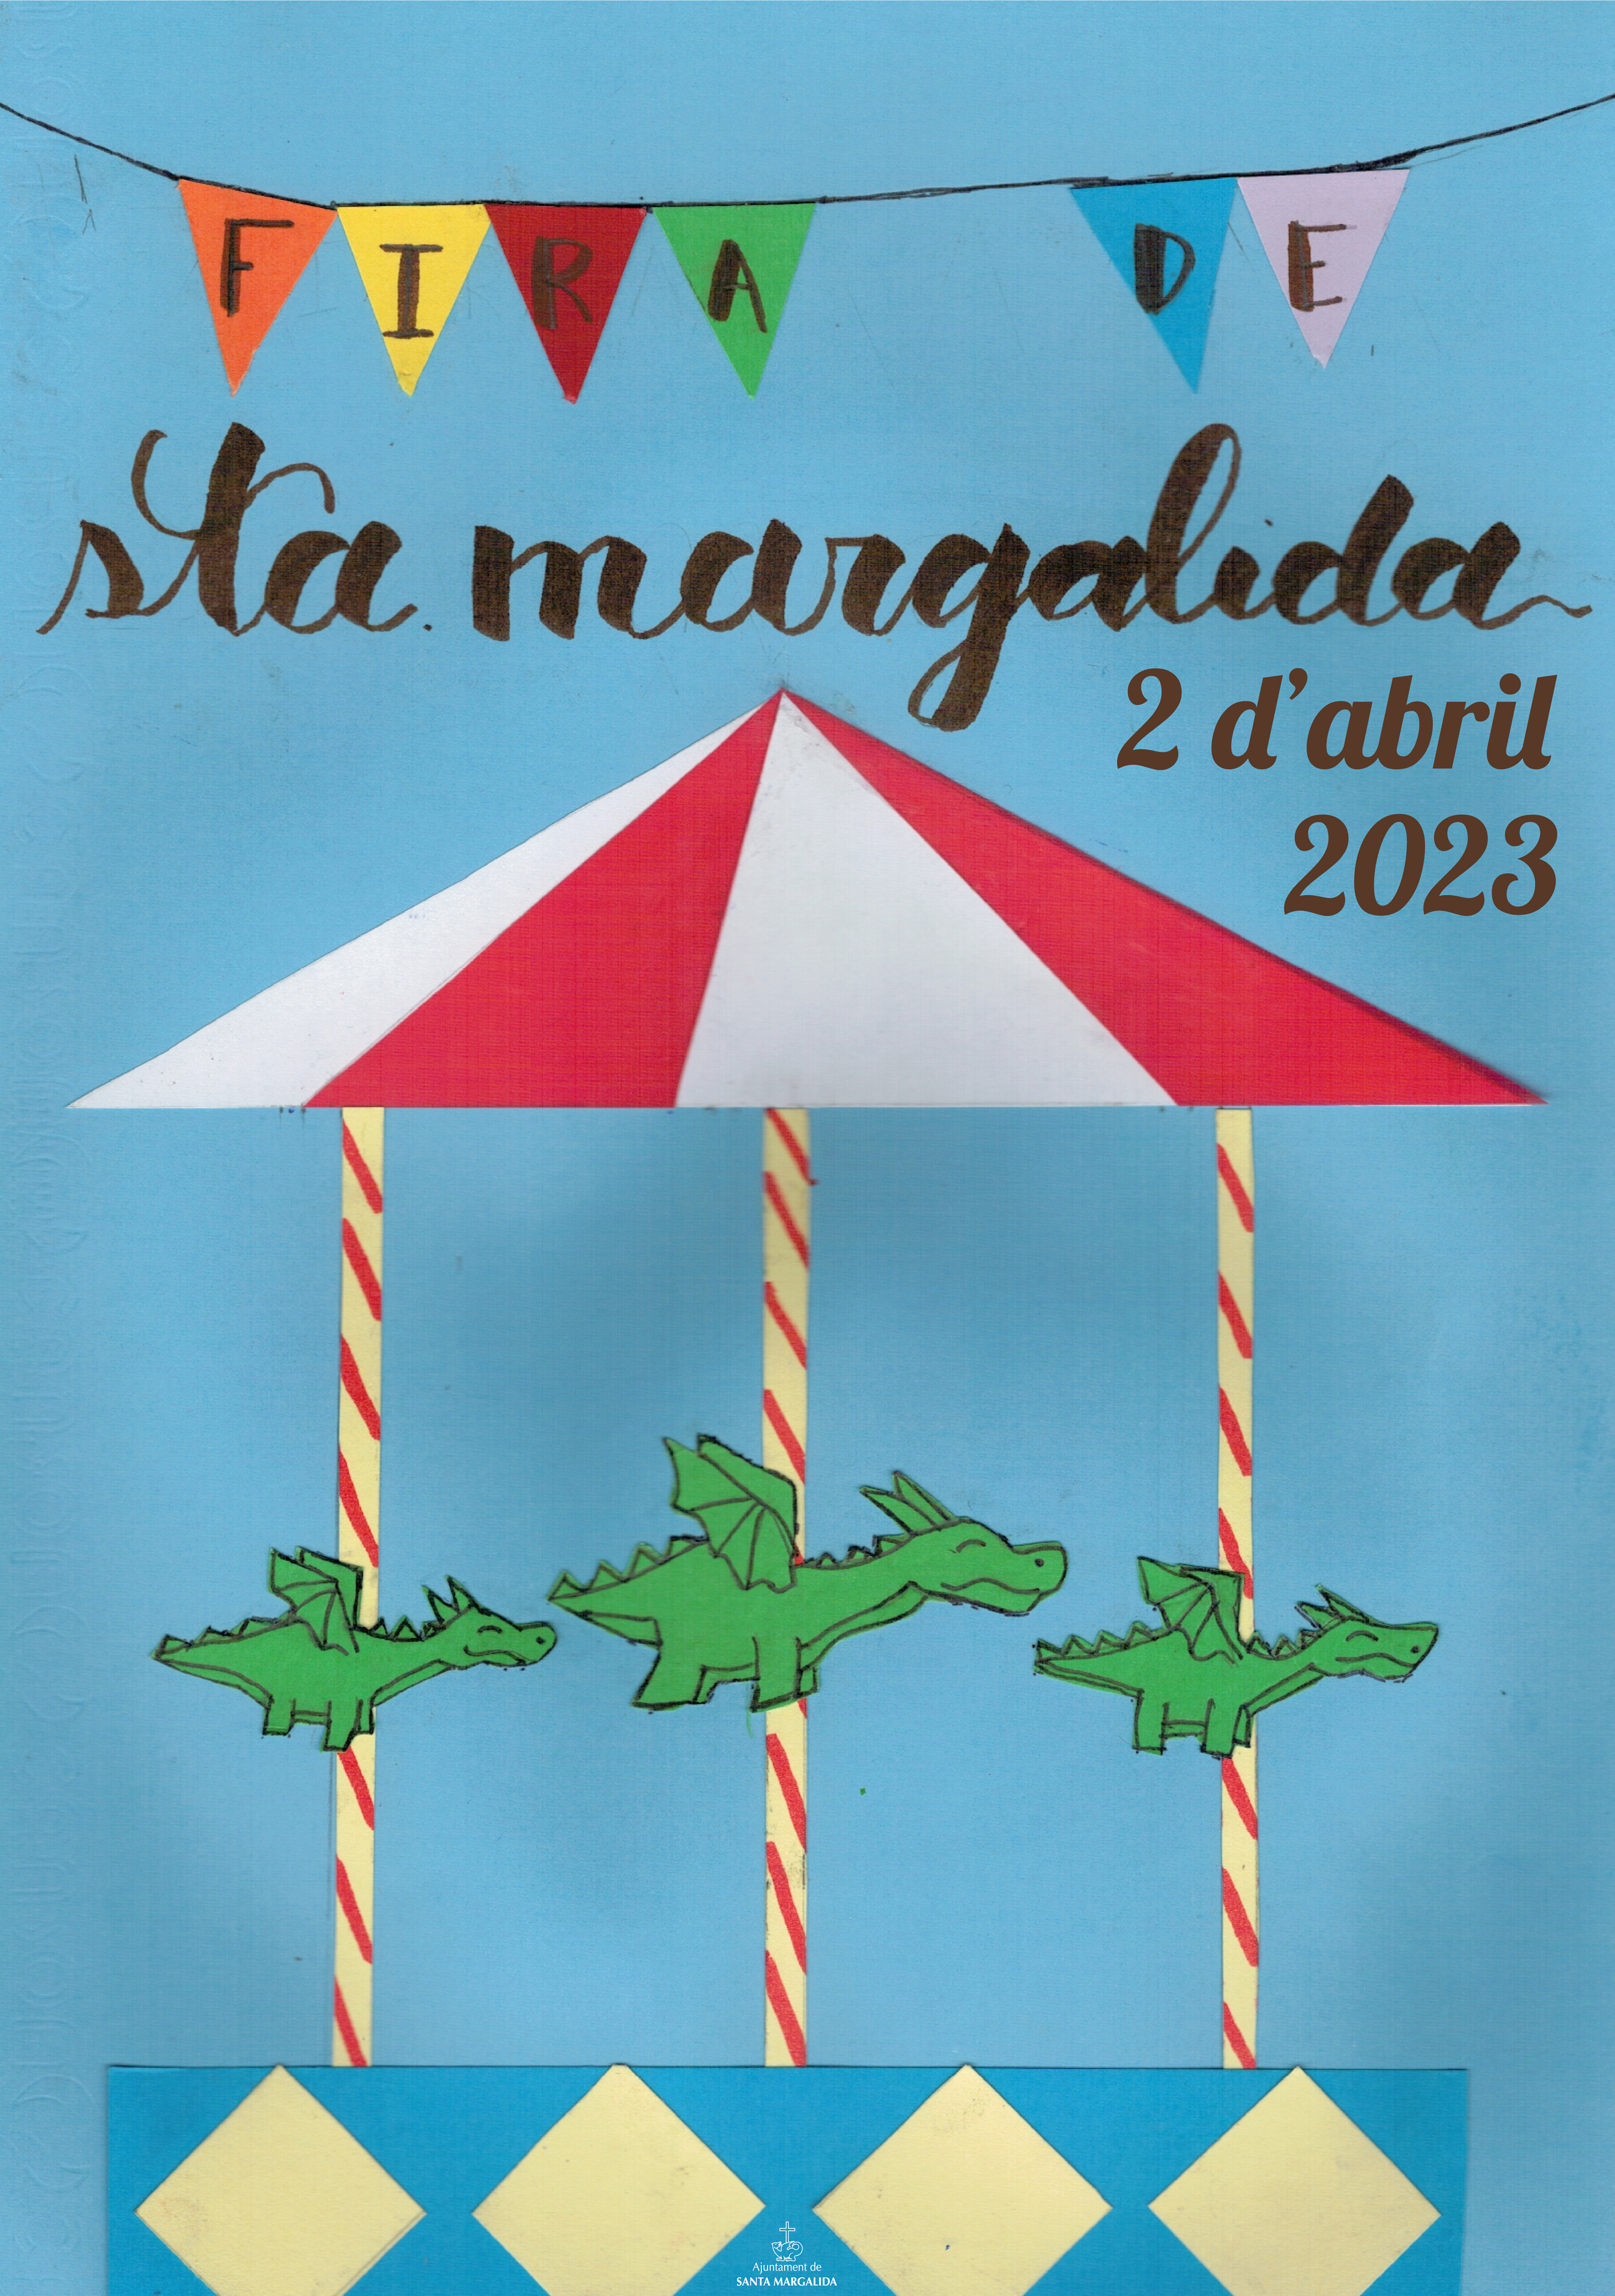 Fira_Santa Margalida 2023